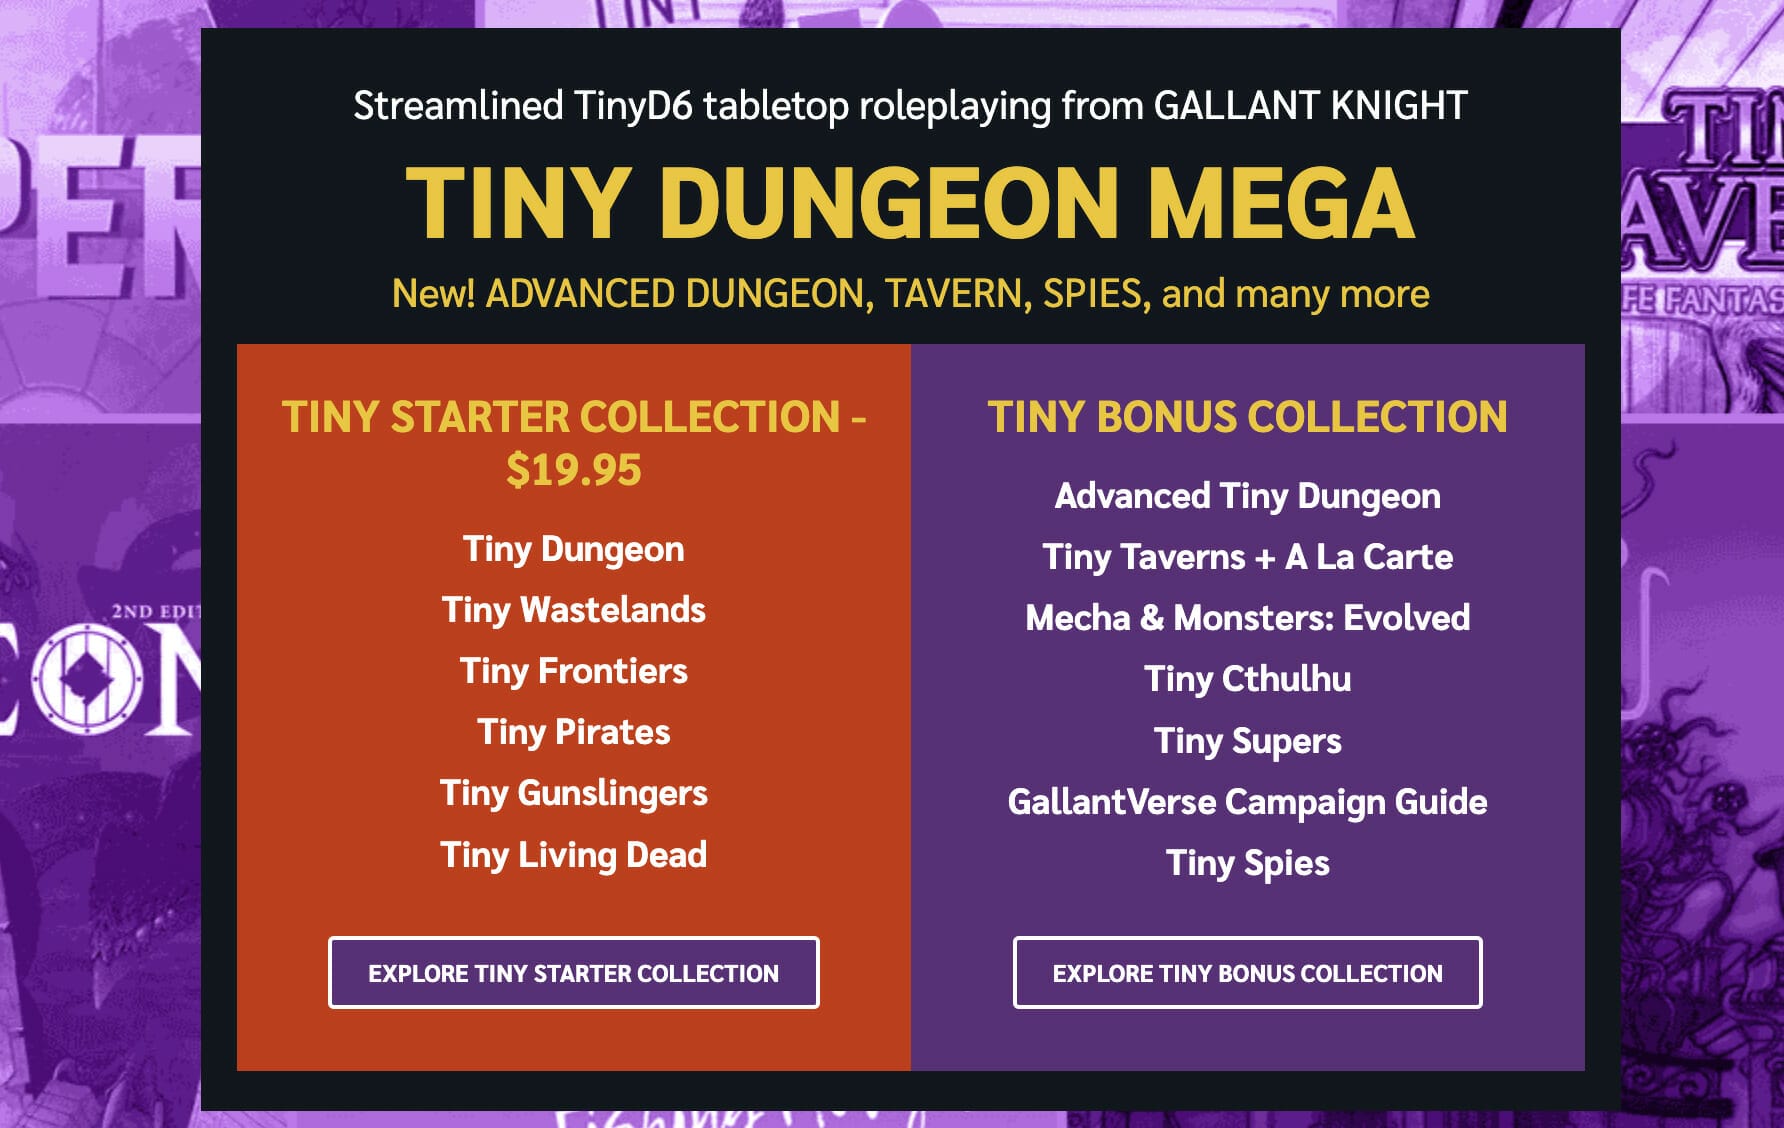 Tiny Dungeon Meta tiers